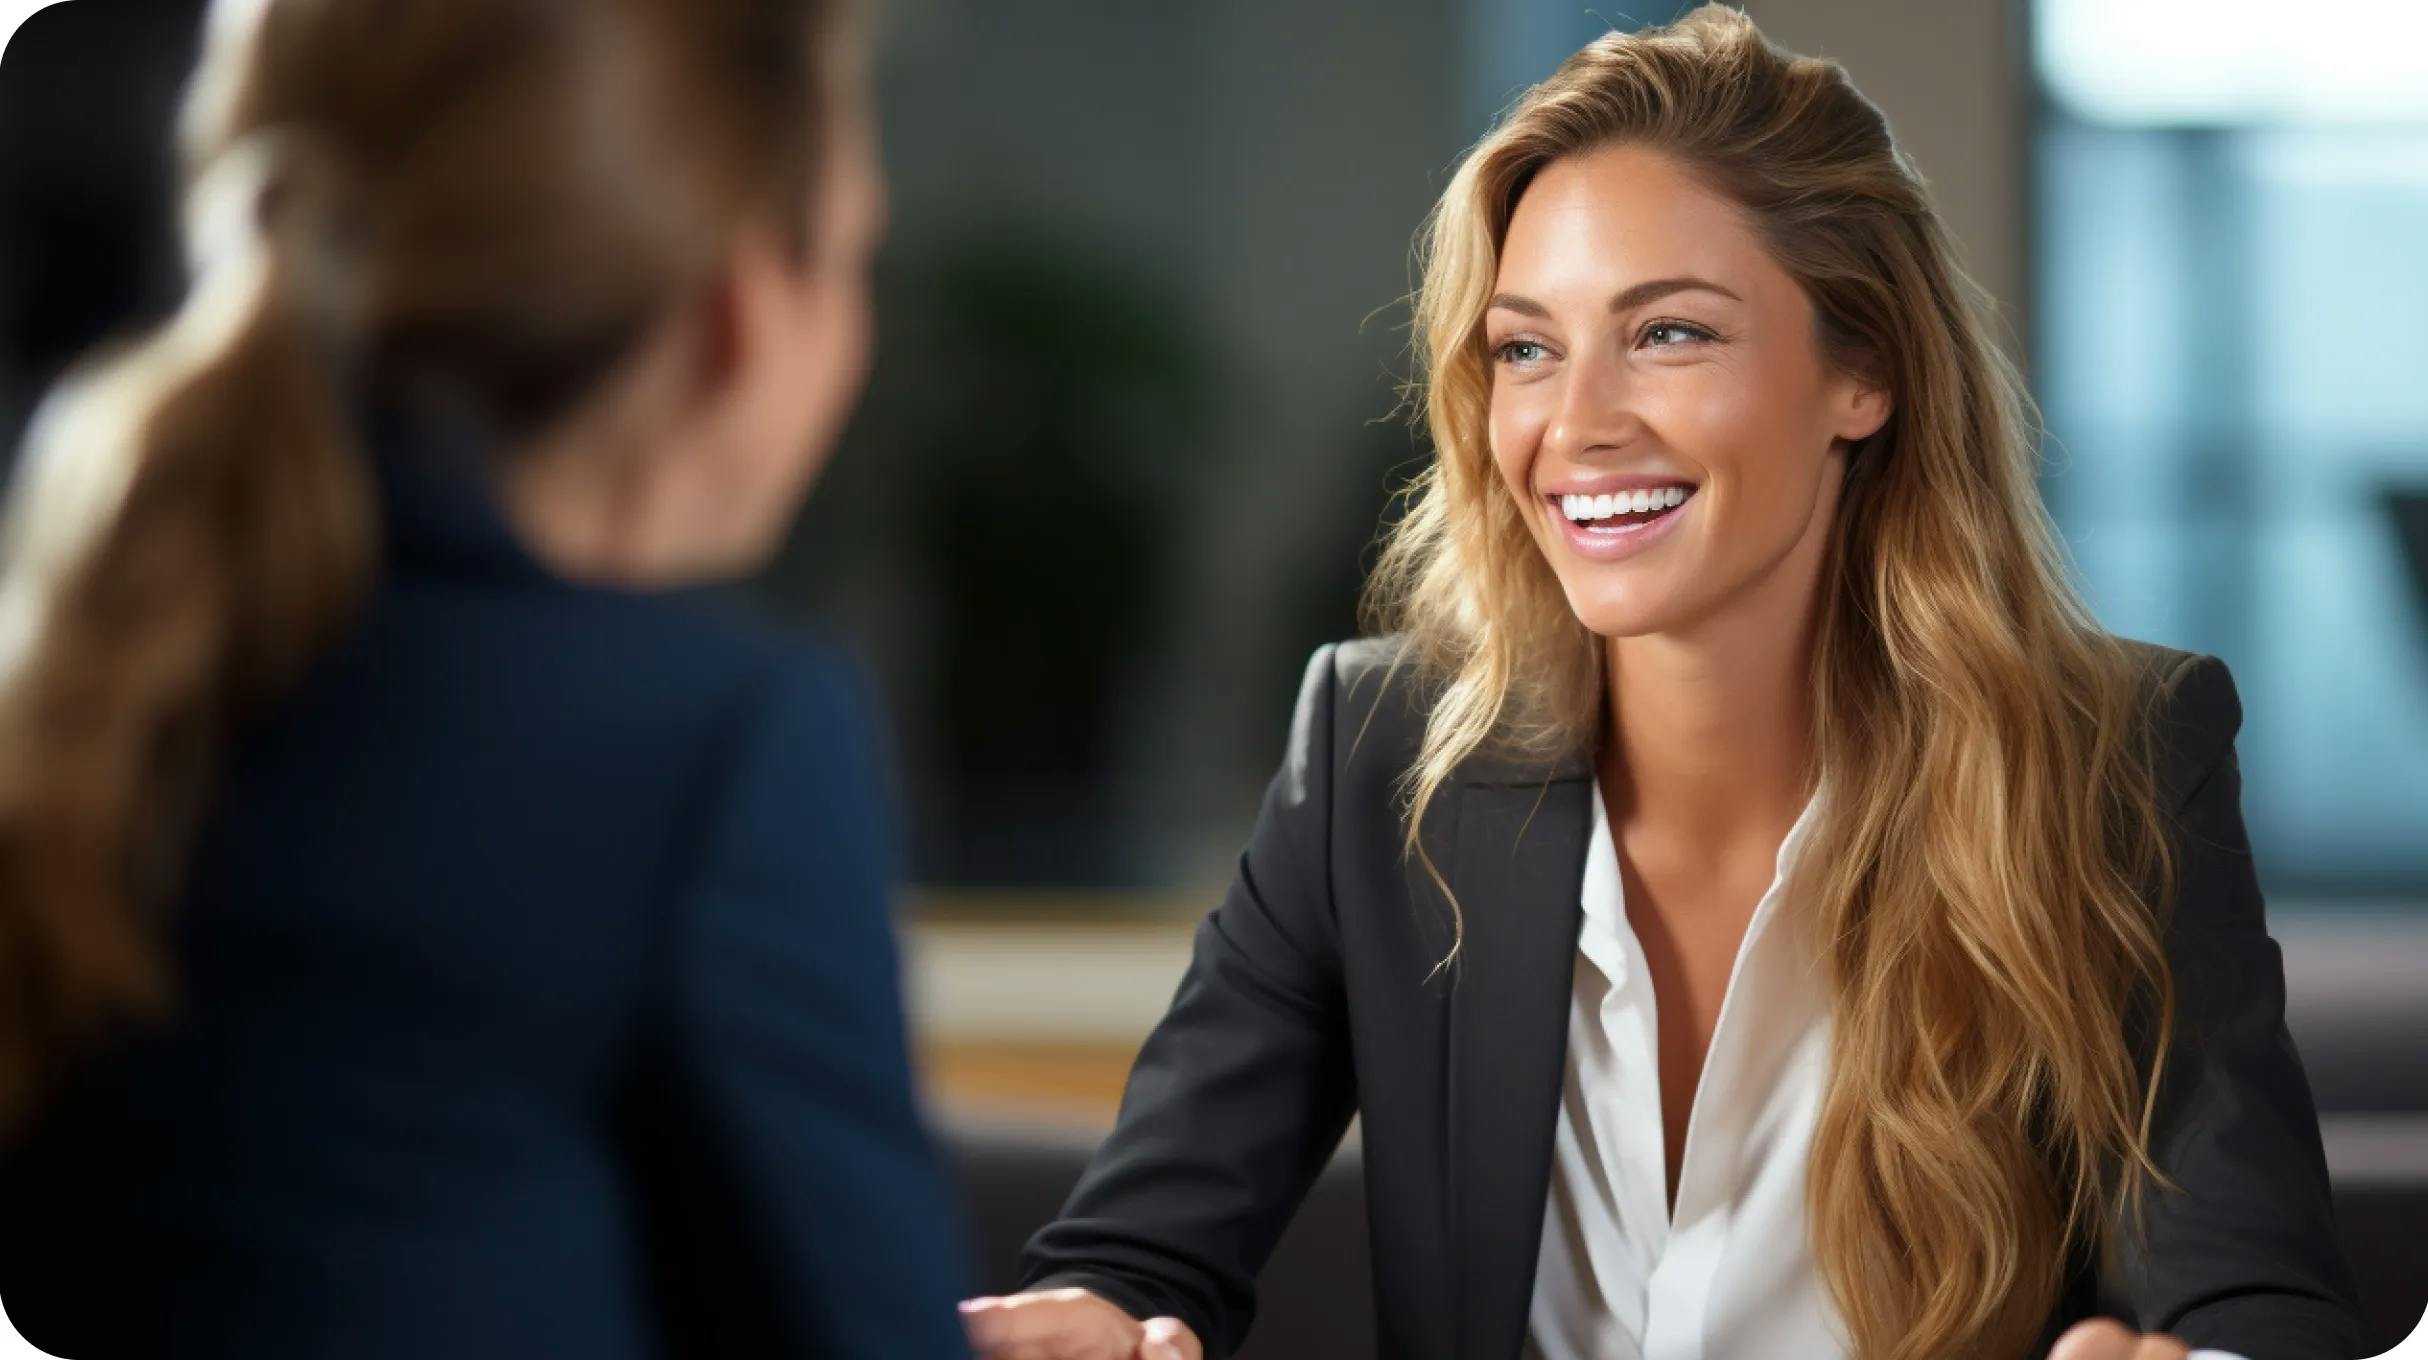 A happy woman talking in a office space